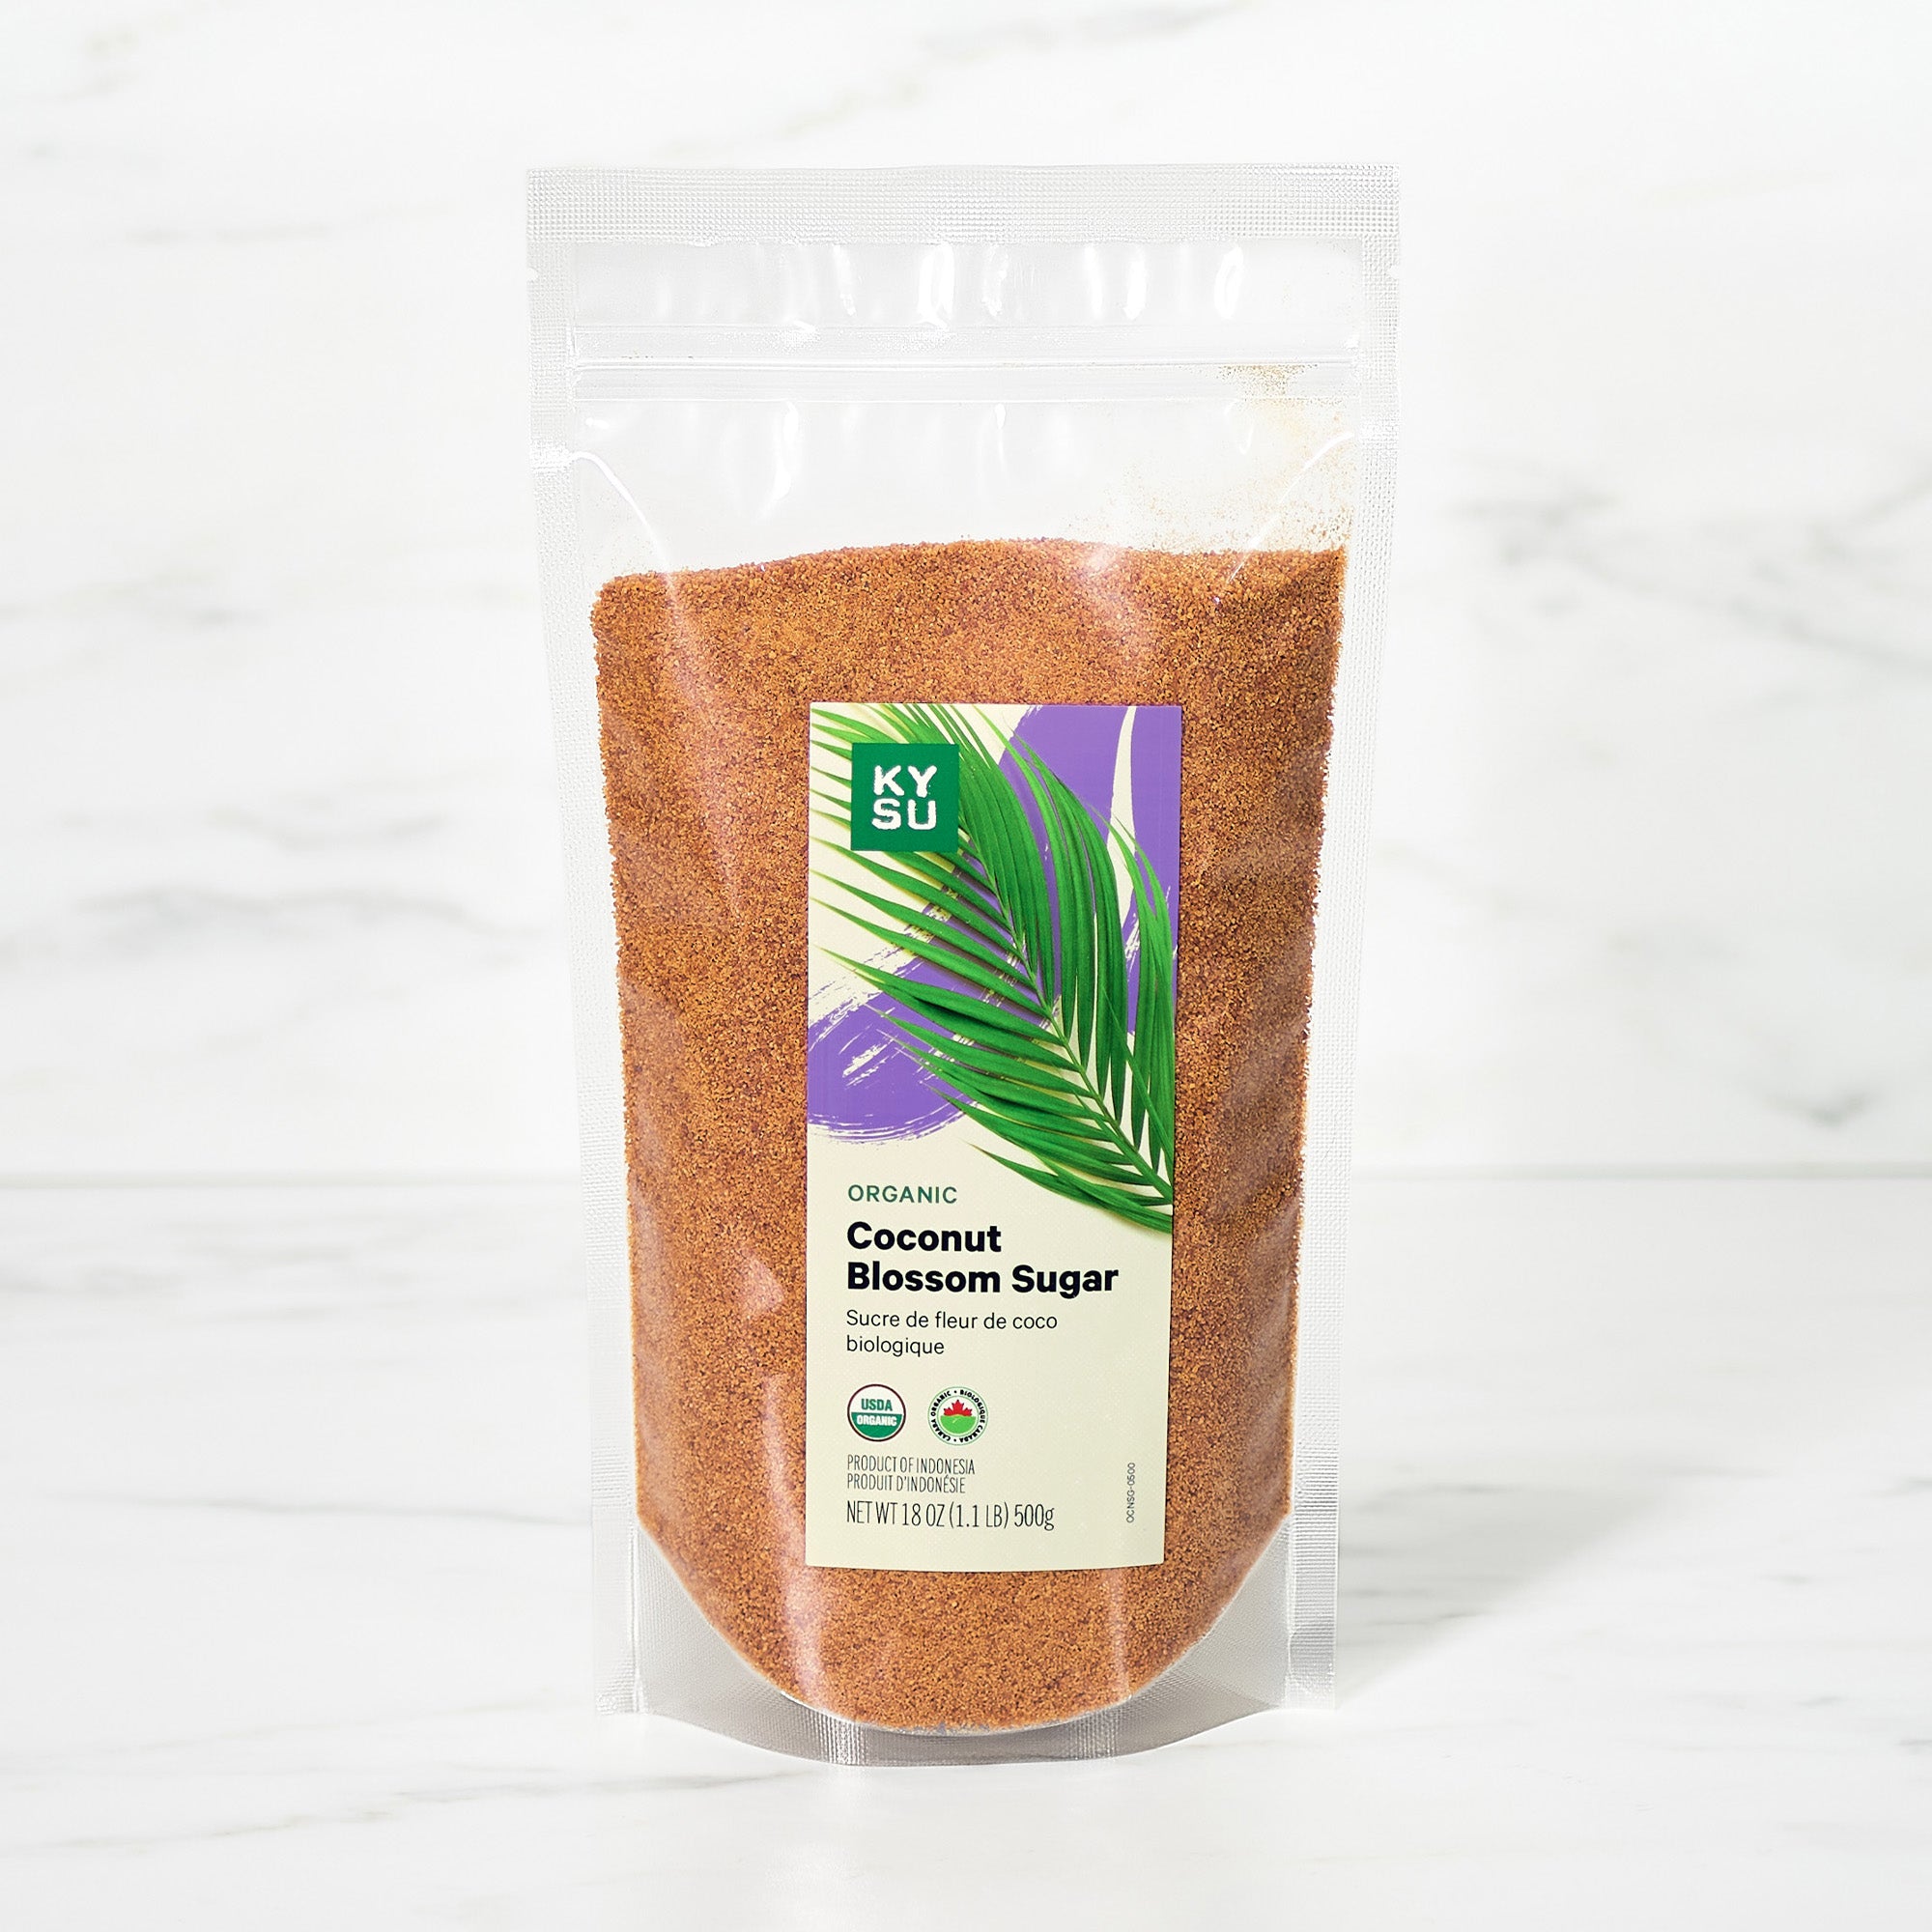 Organic coconut blossom sugar, 1.1 lb